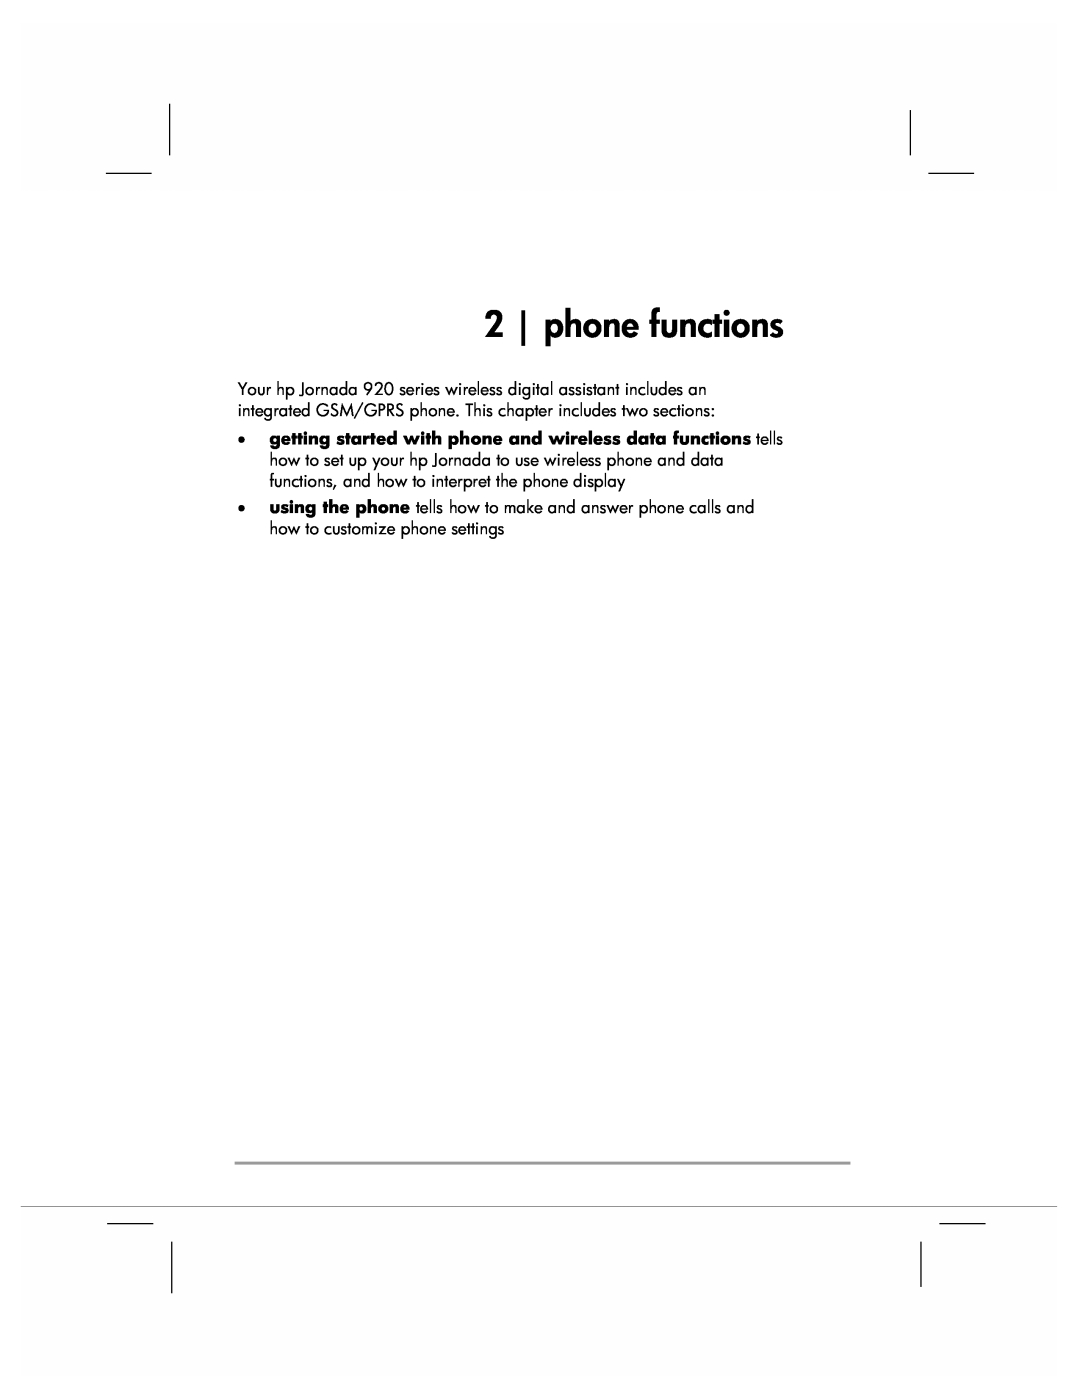 HP 920 manual phone functions 